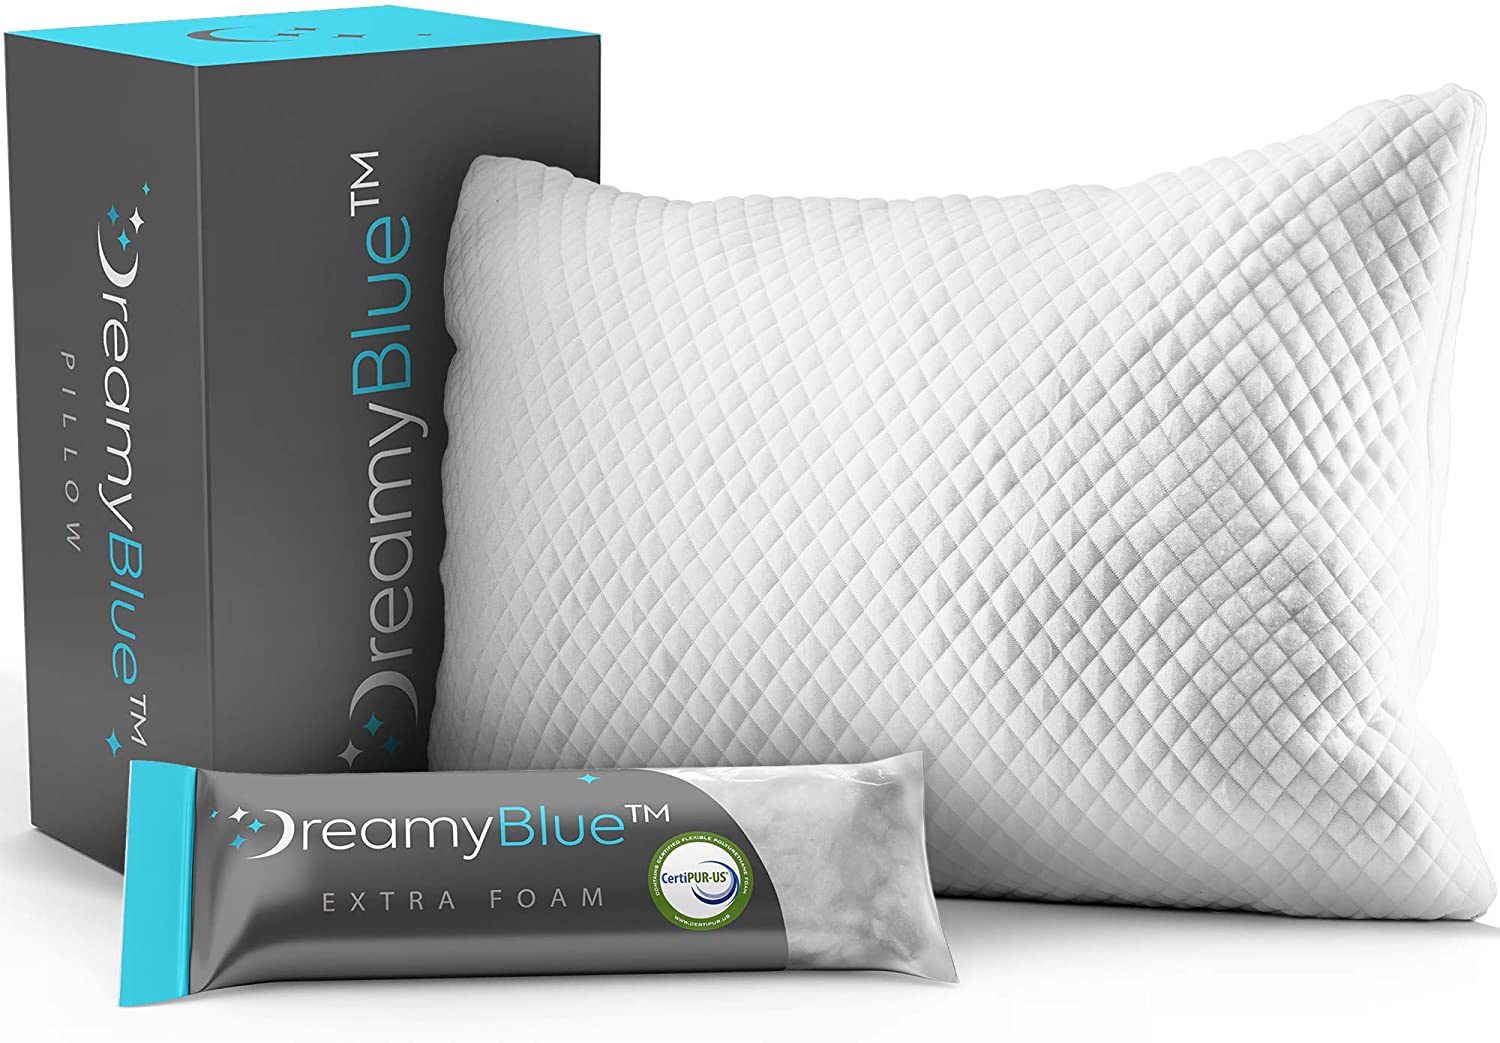 DreamyBlue Premium Pillow for Sleeping